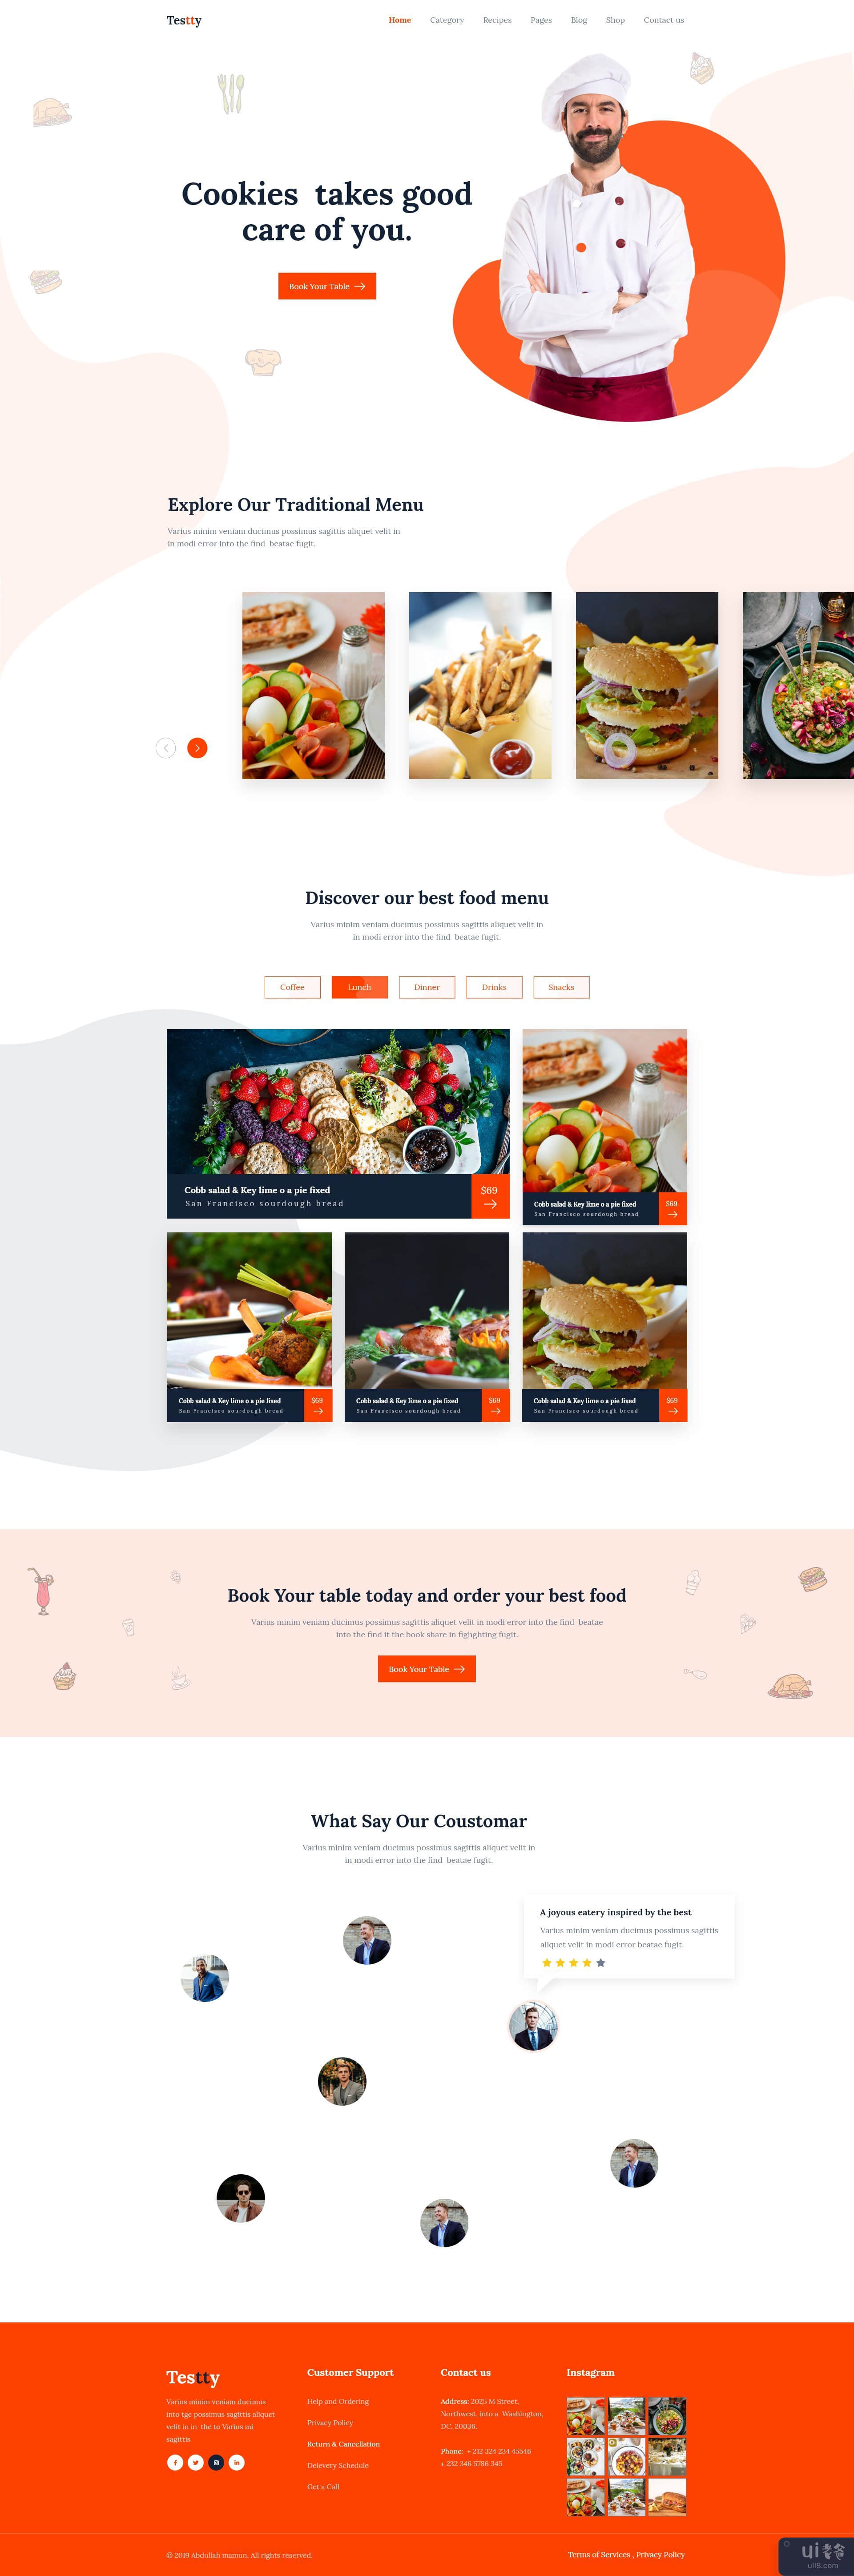 餐厅网站模板(Restaurant website template)插图